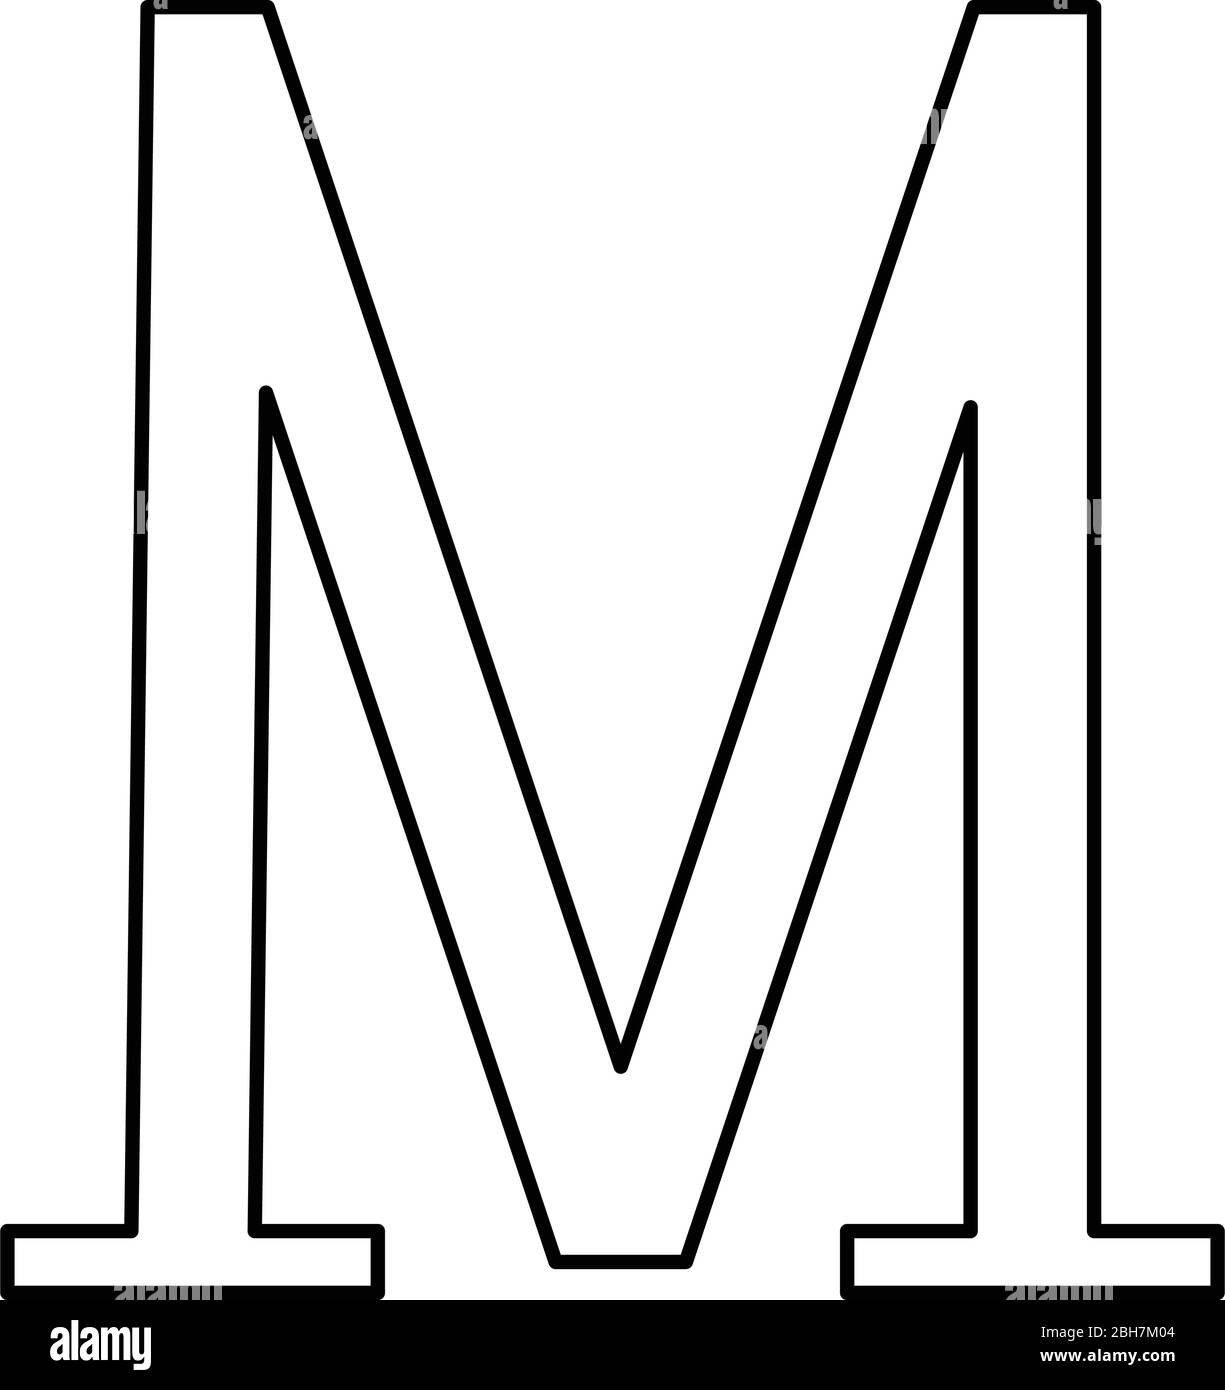 Mu greek symbol capital letter uppercase font icon outline black color vector illustration flat style simple image Stock Vector